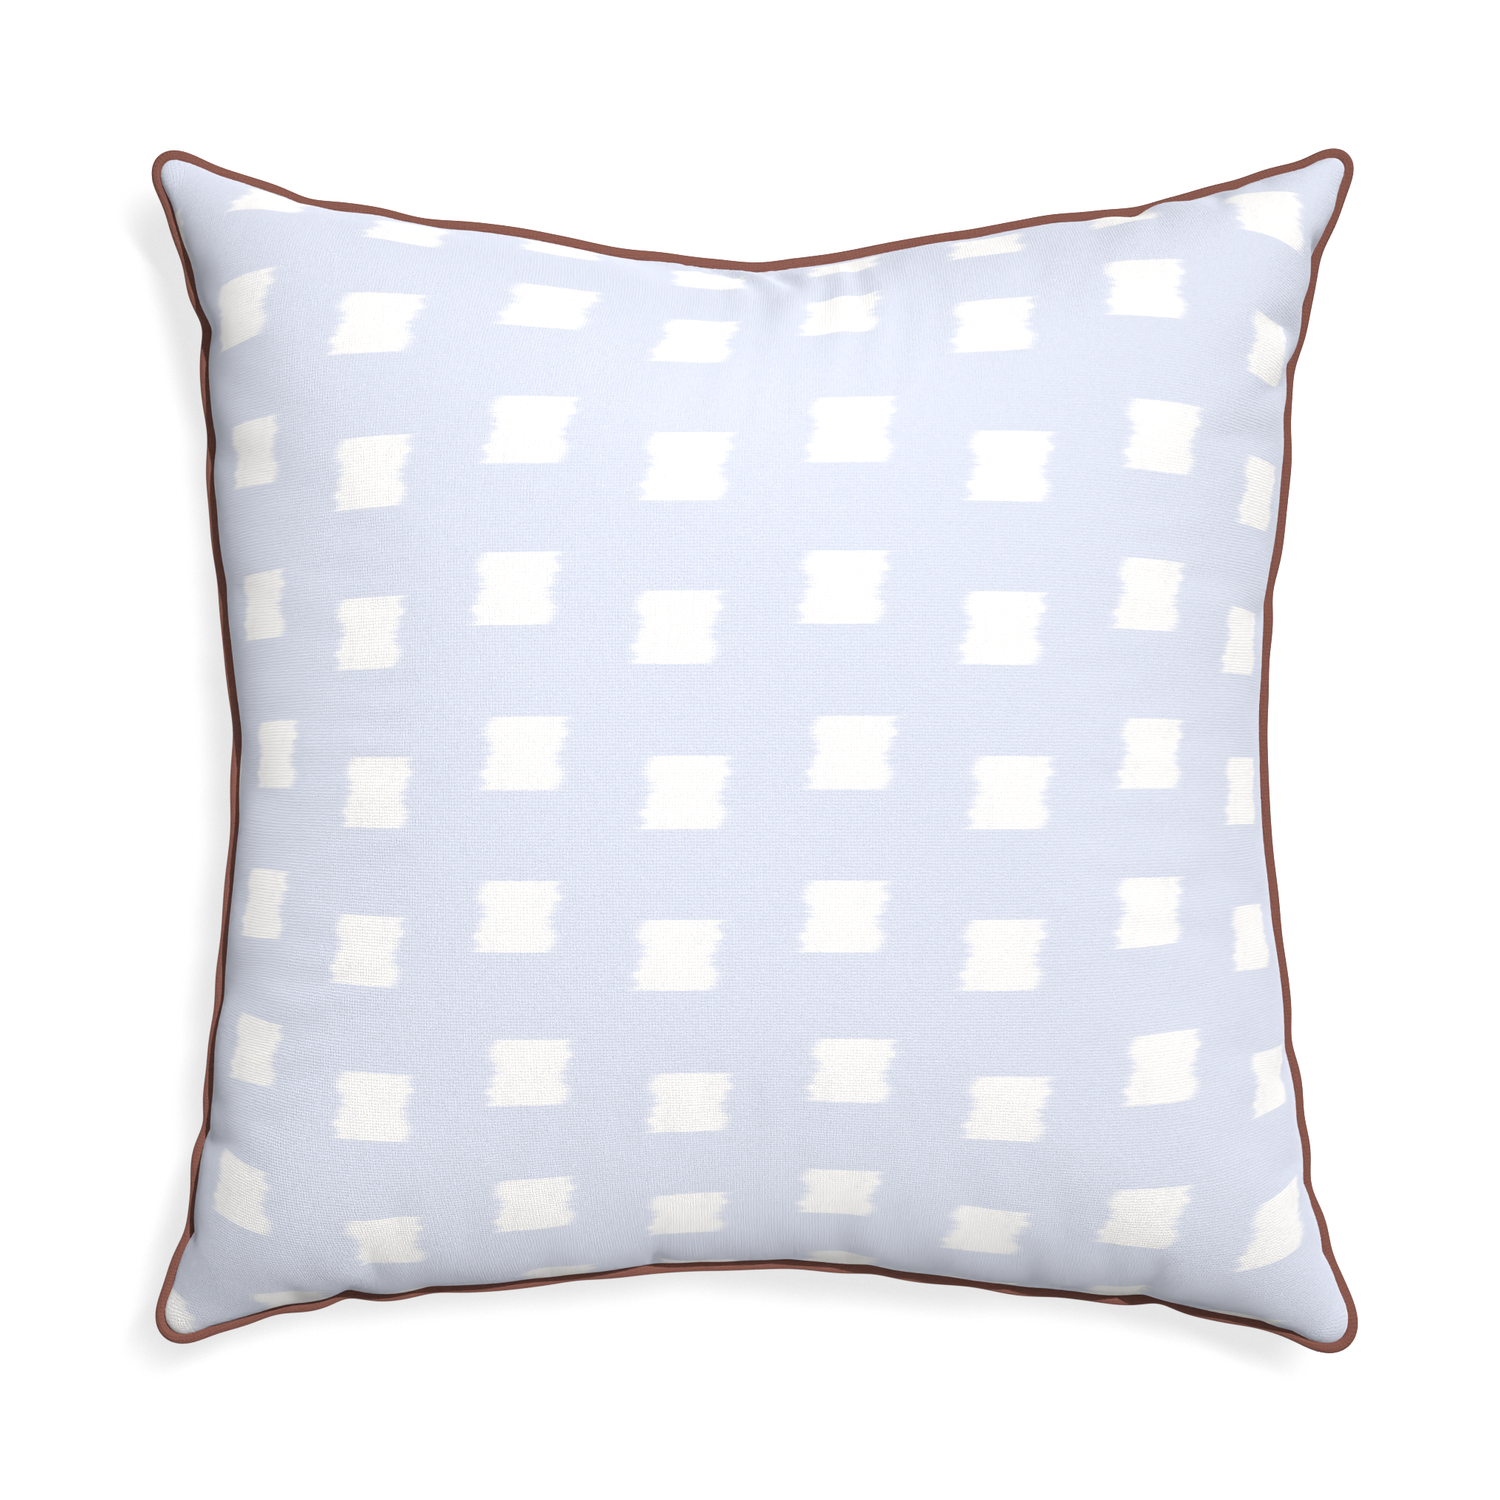 Euro-sham denton custom pillow with w piping on white background